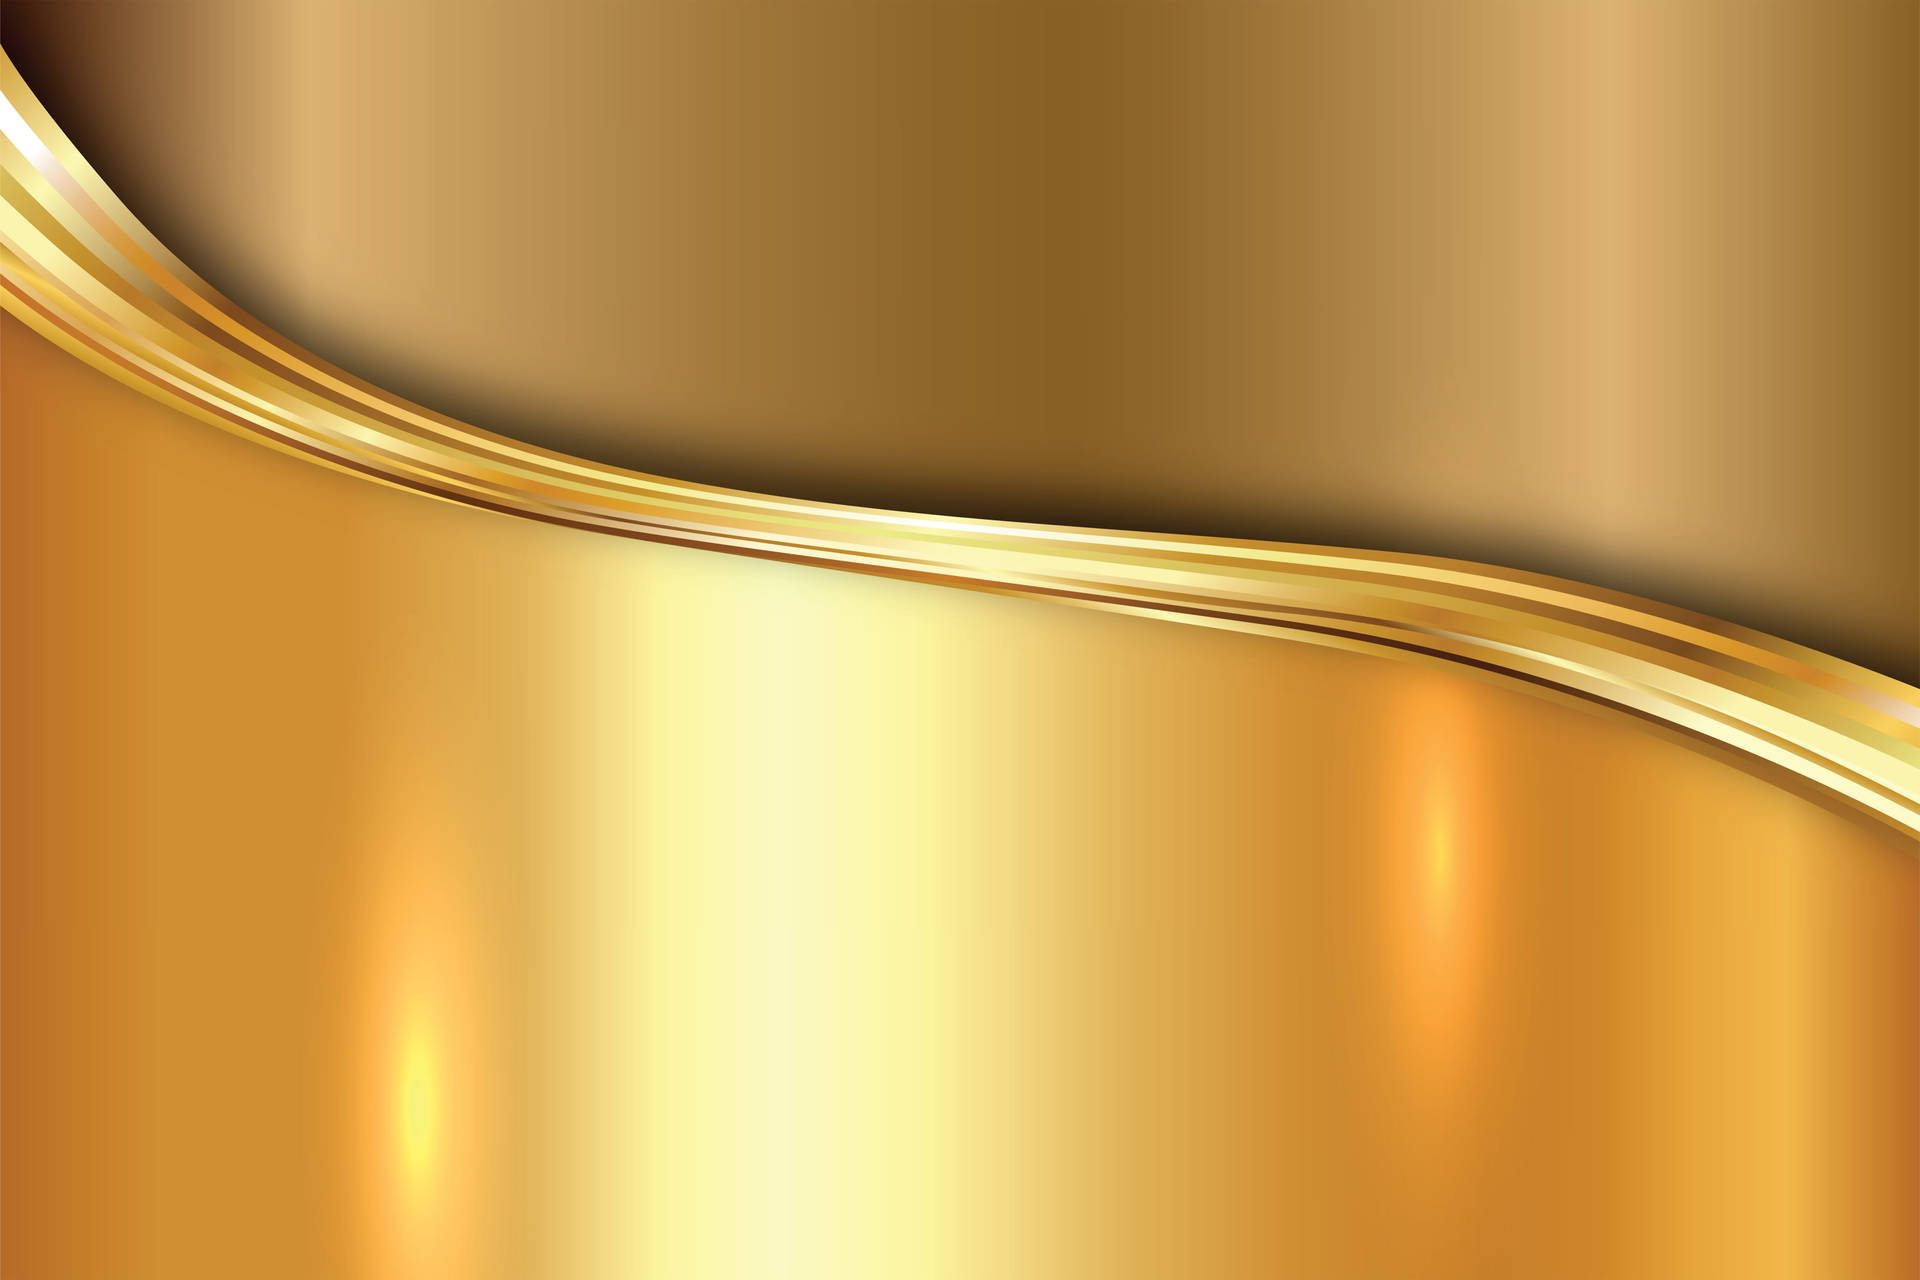 Matellic Gold Background Design Picture